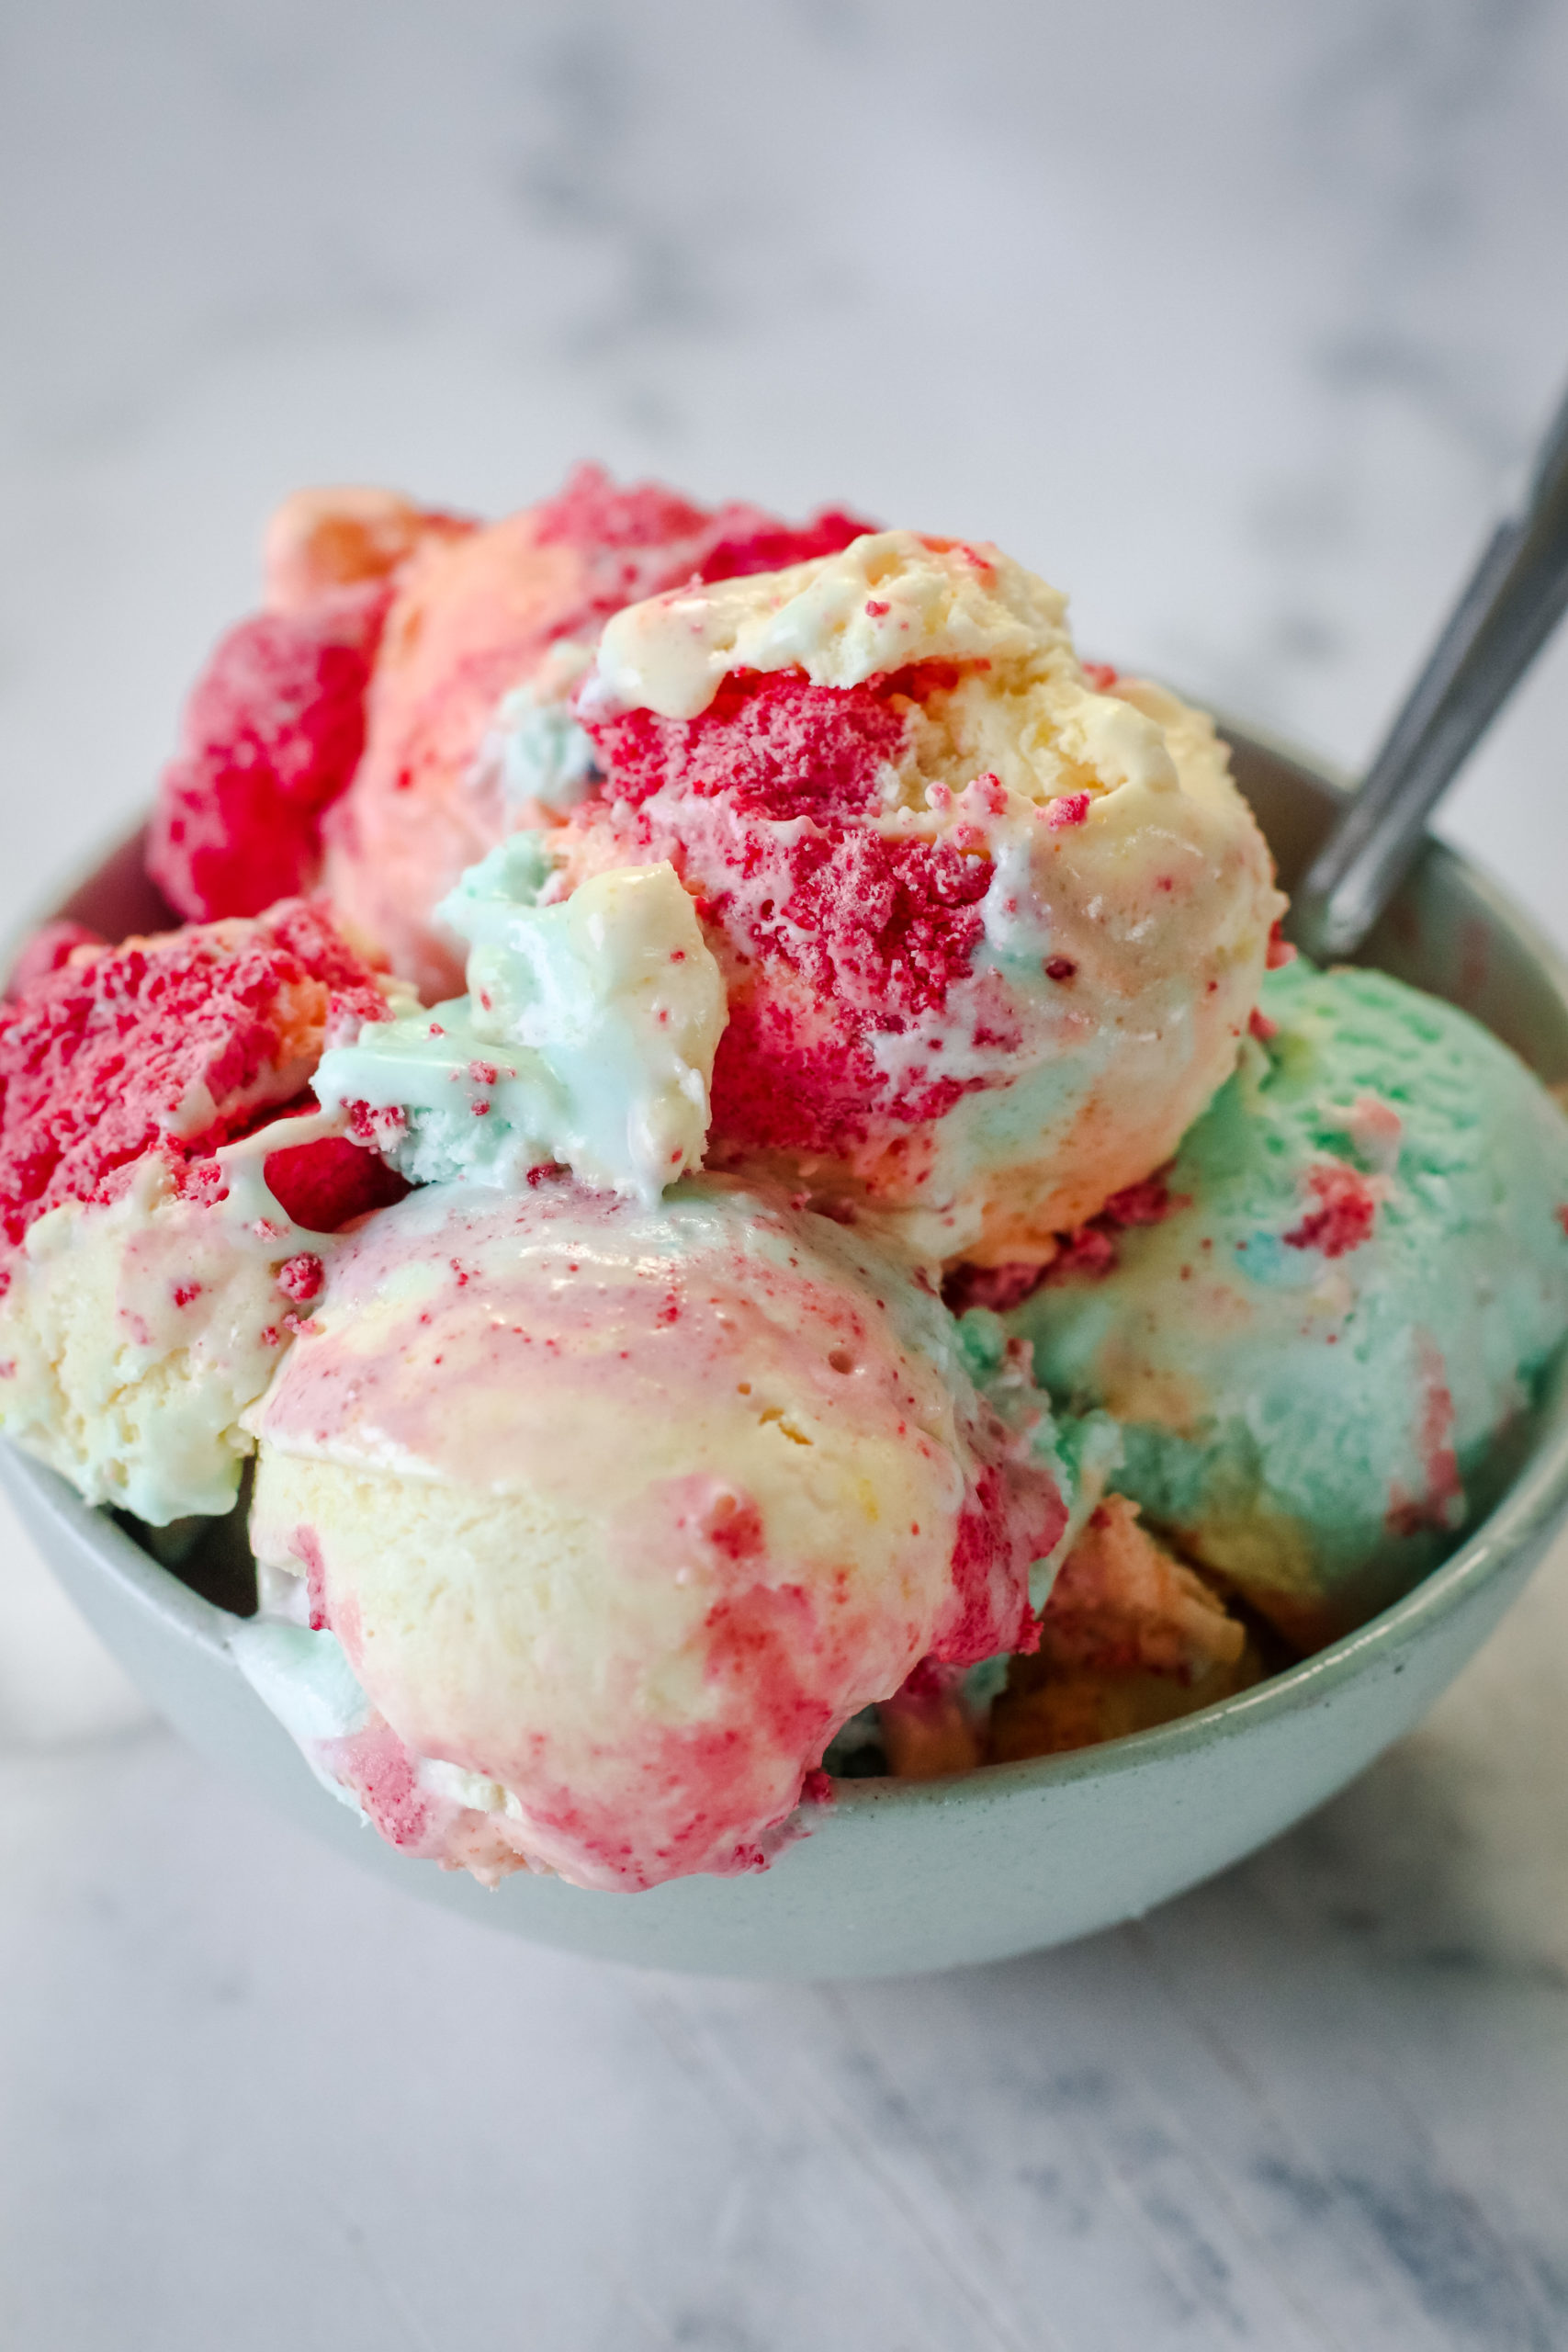 Yum! No, Yuck! Weird Ice Cream Flavors Churn Up Discord - WSJ